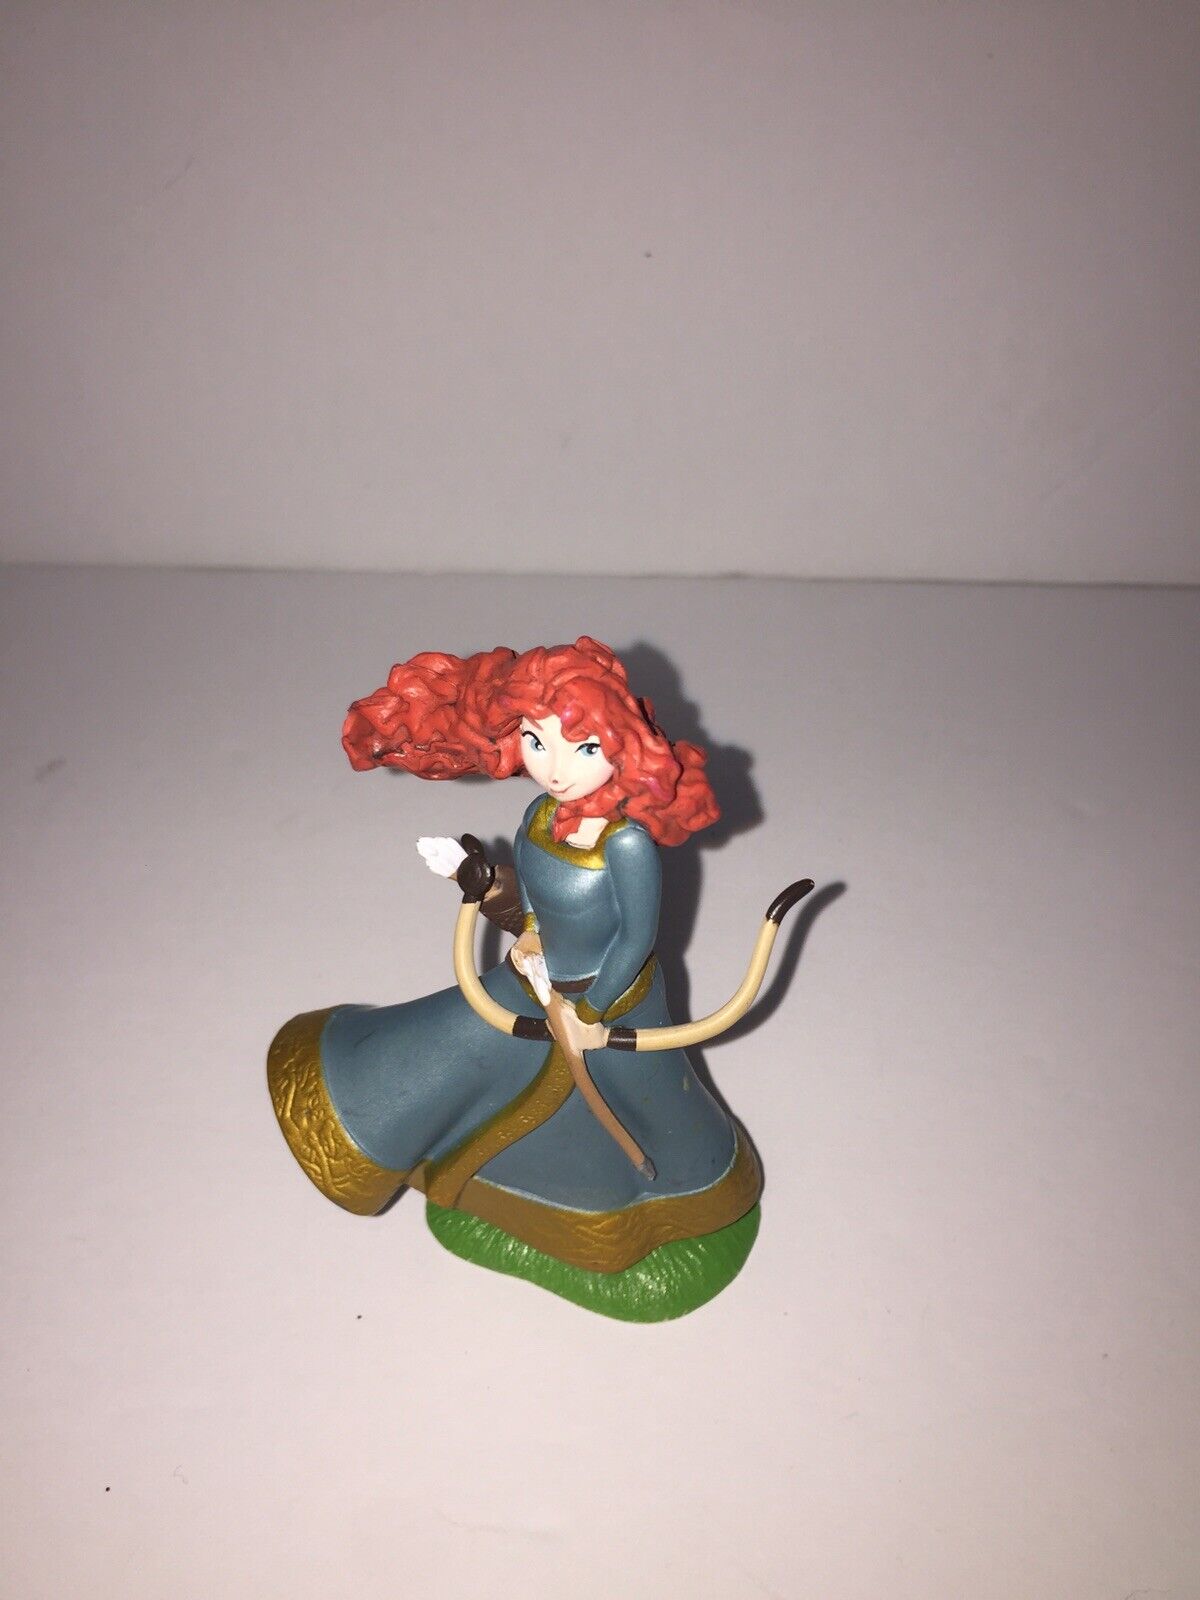 Disney Store Ltd. Princess Merida Brave Figure or Topper Figurine 3.75\